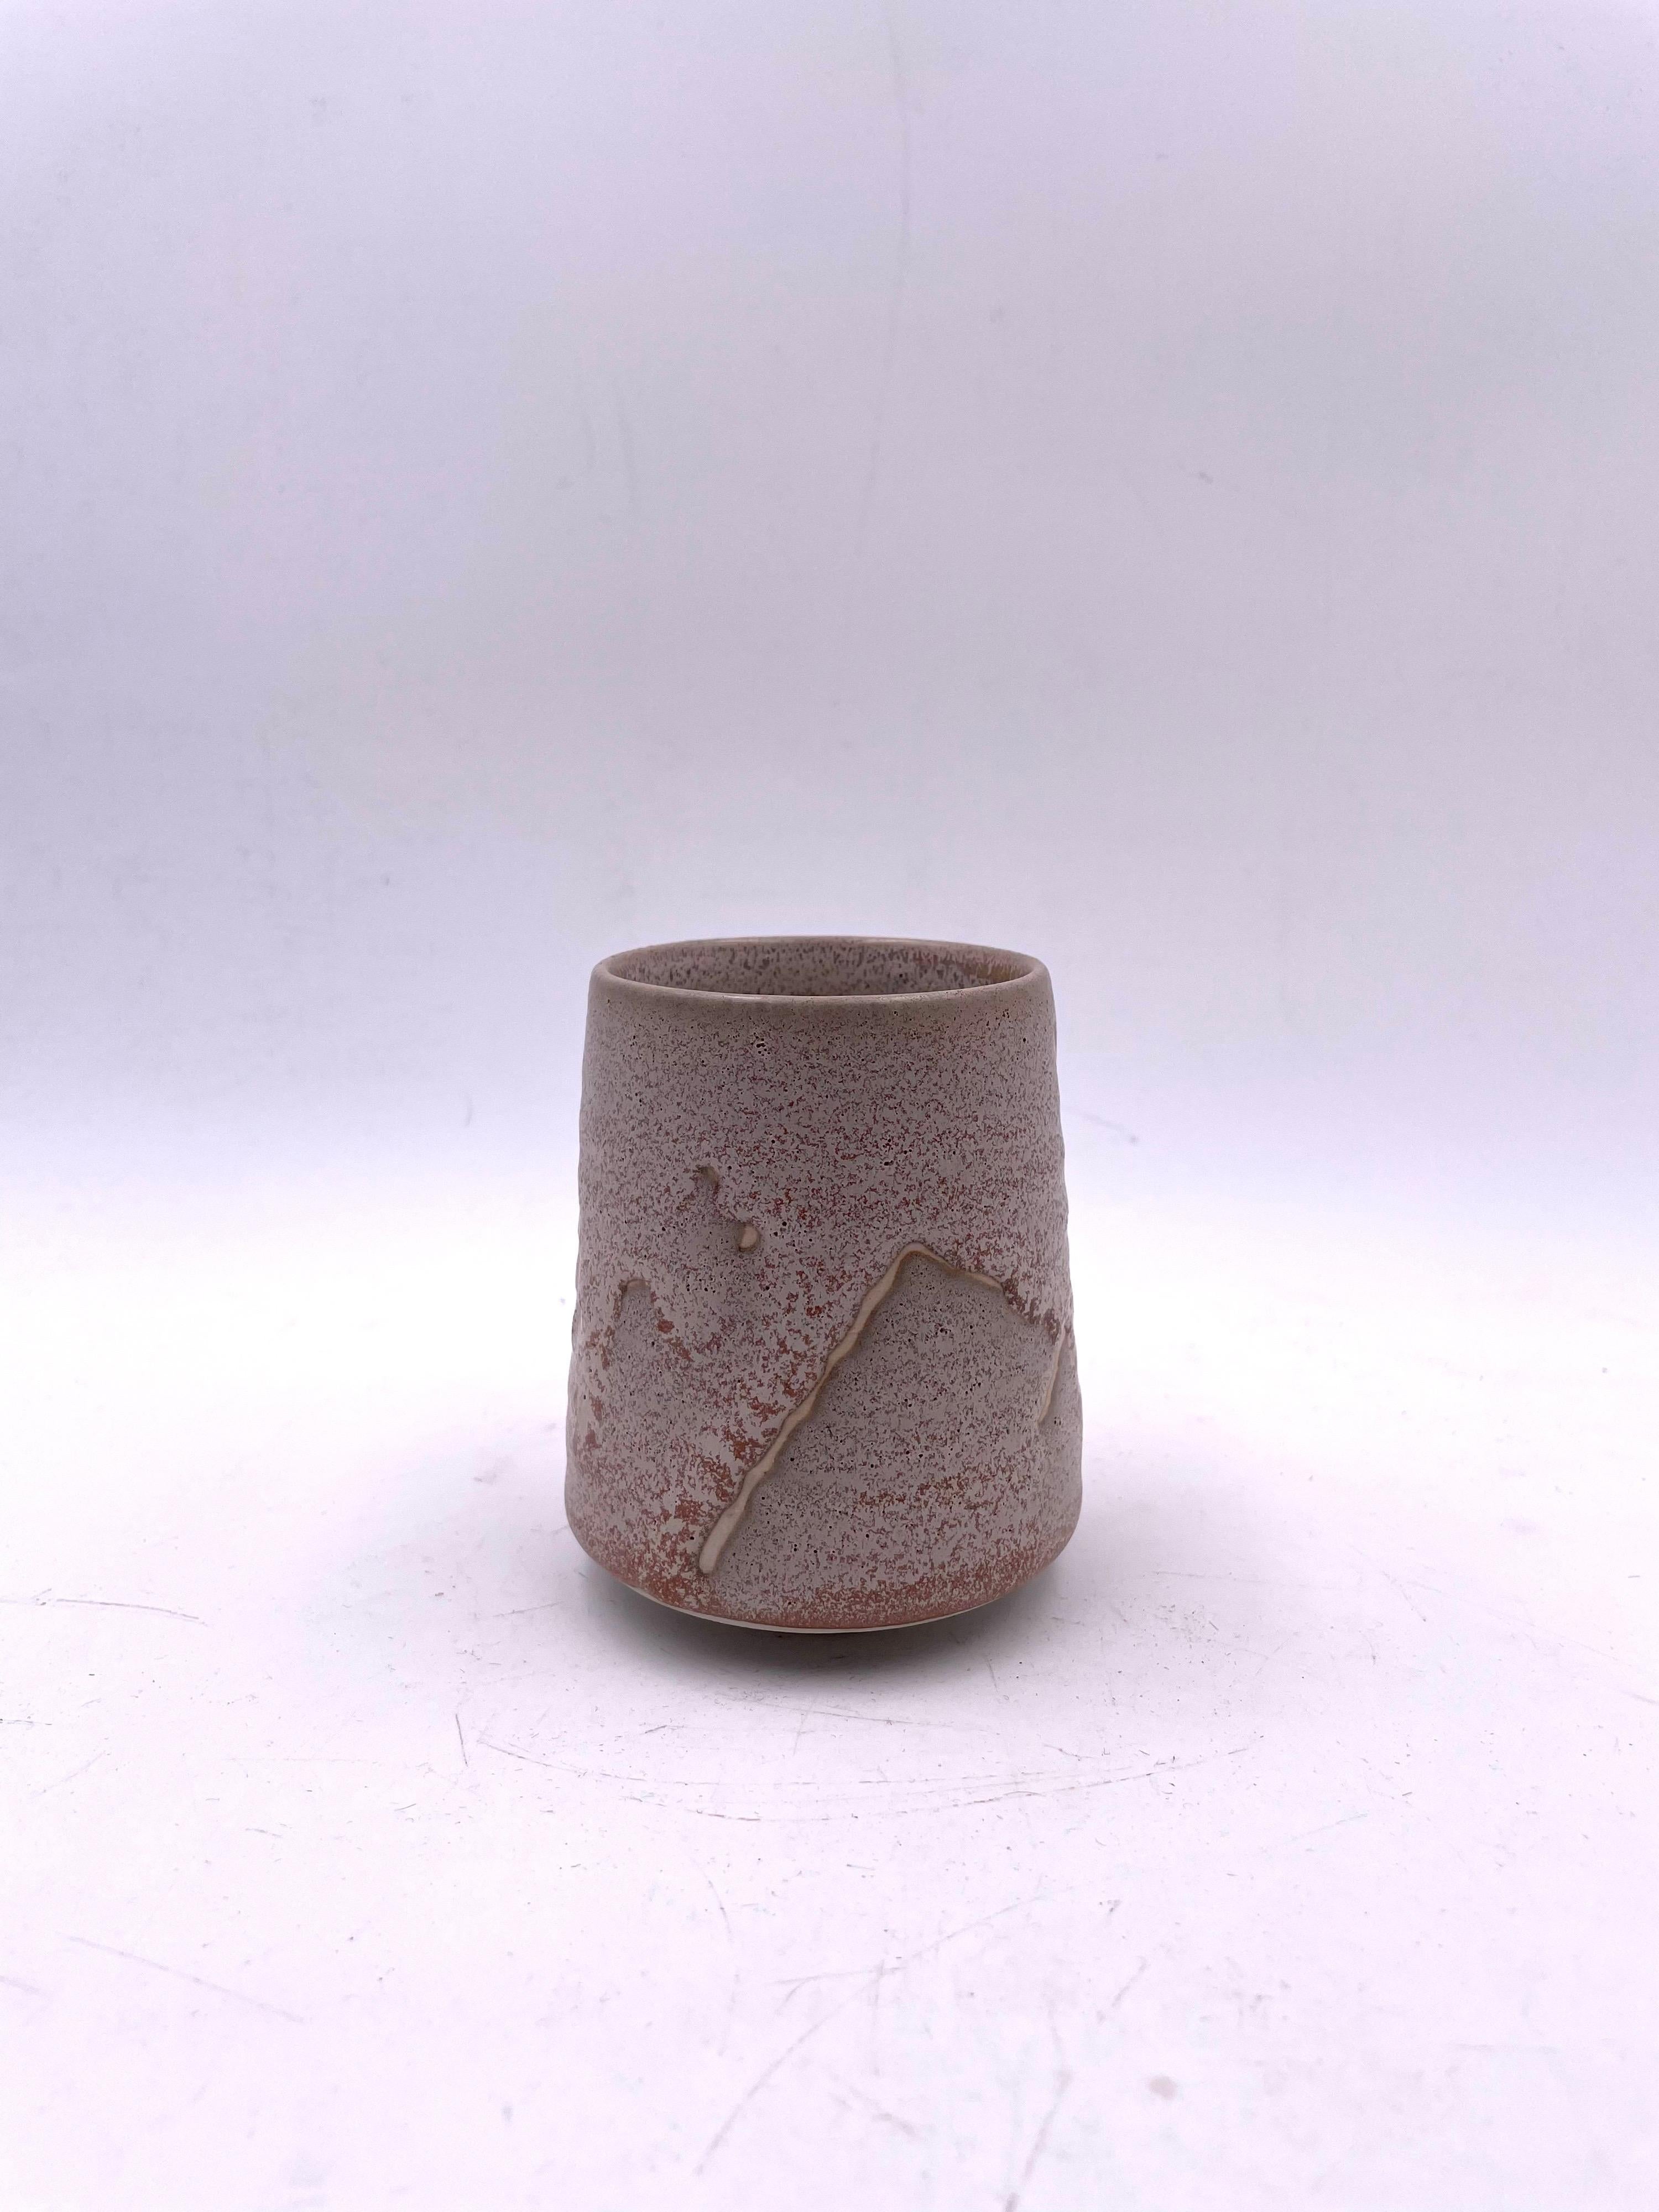 Modernist ceramic Ikebana vase with a great glaze. Japan, 1960s.